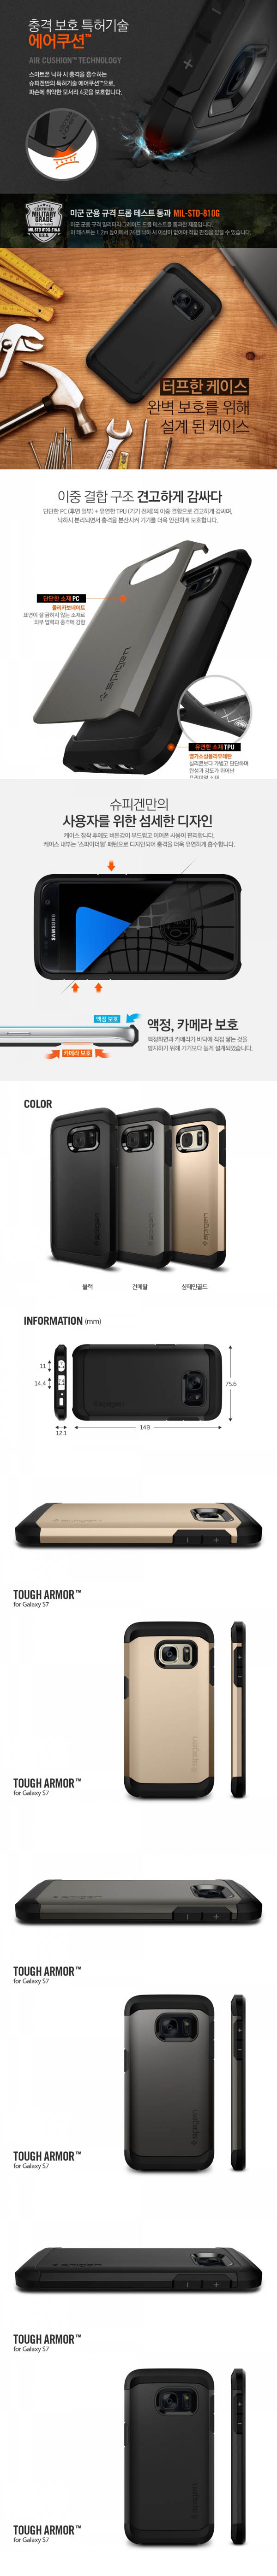 Ốp lưng Galaxy S7 Spigen Tough Armor chống sốc 3